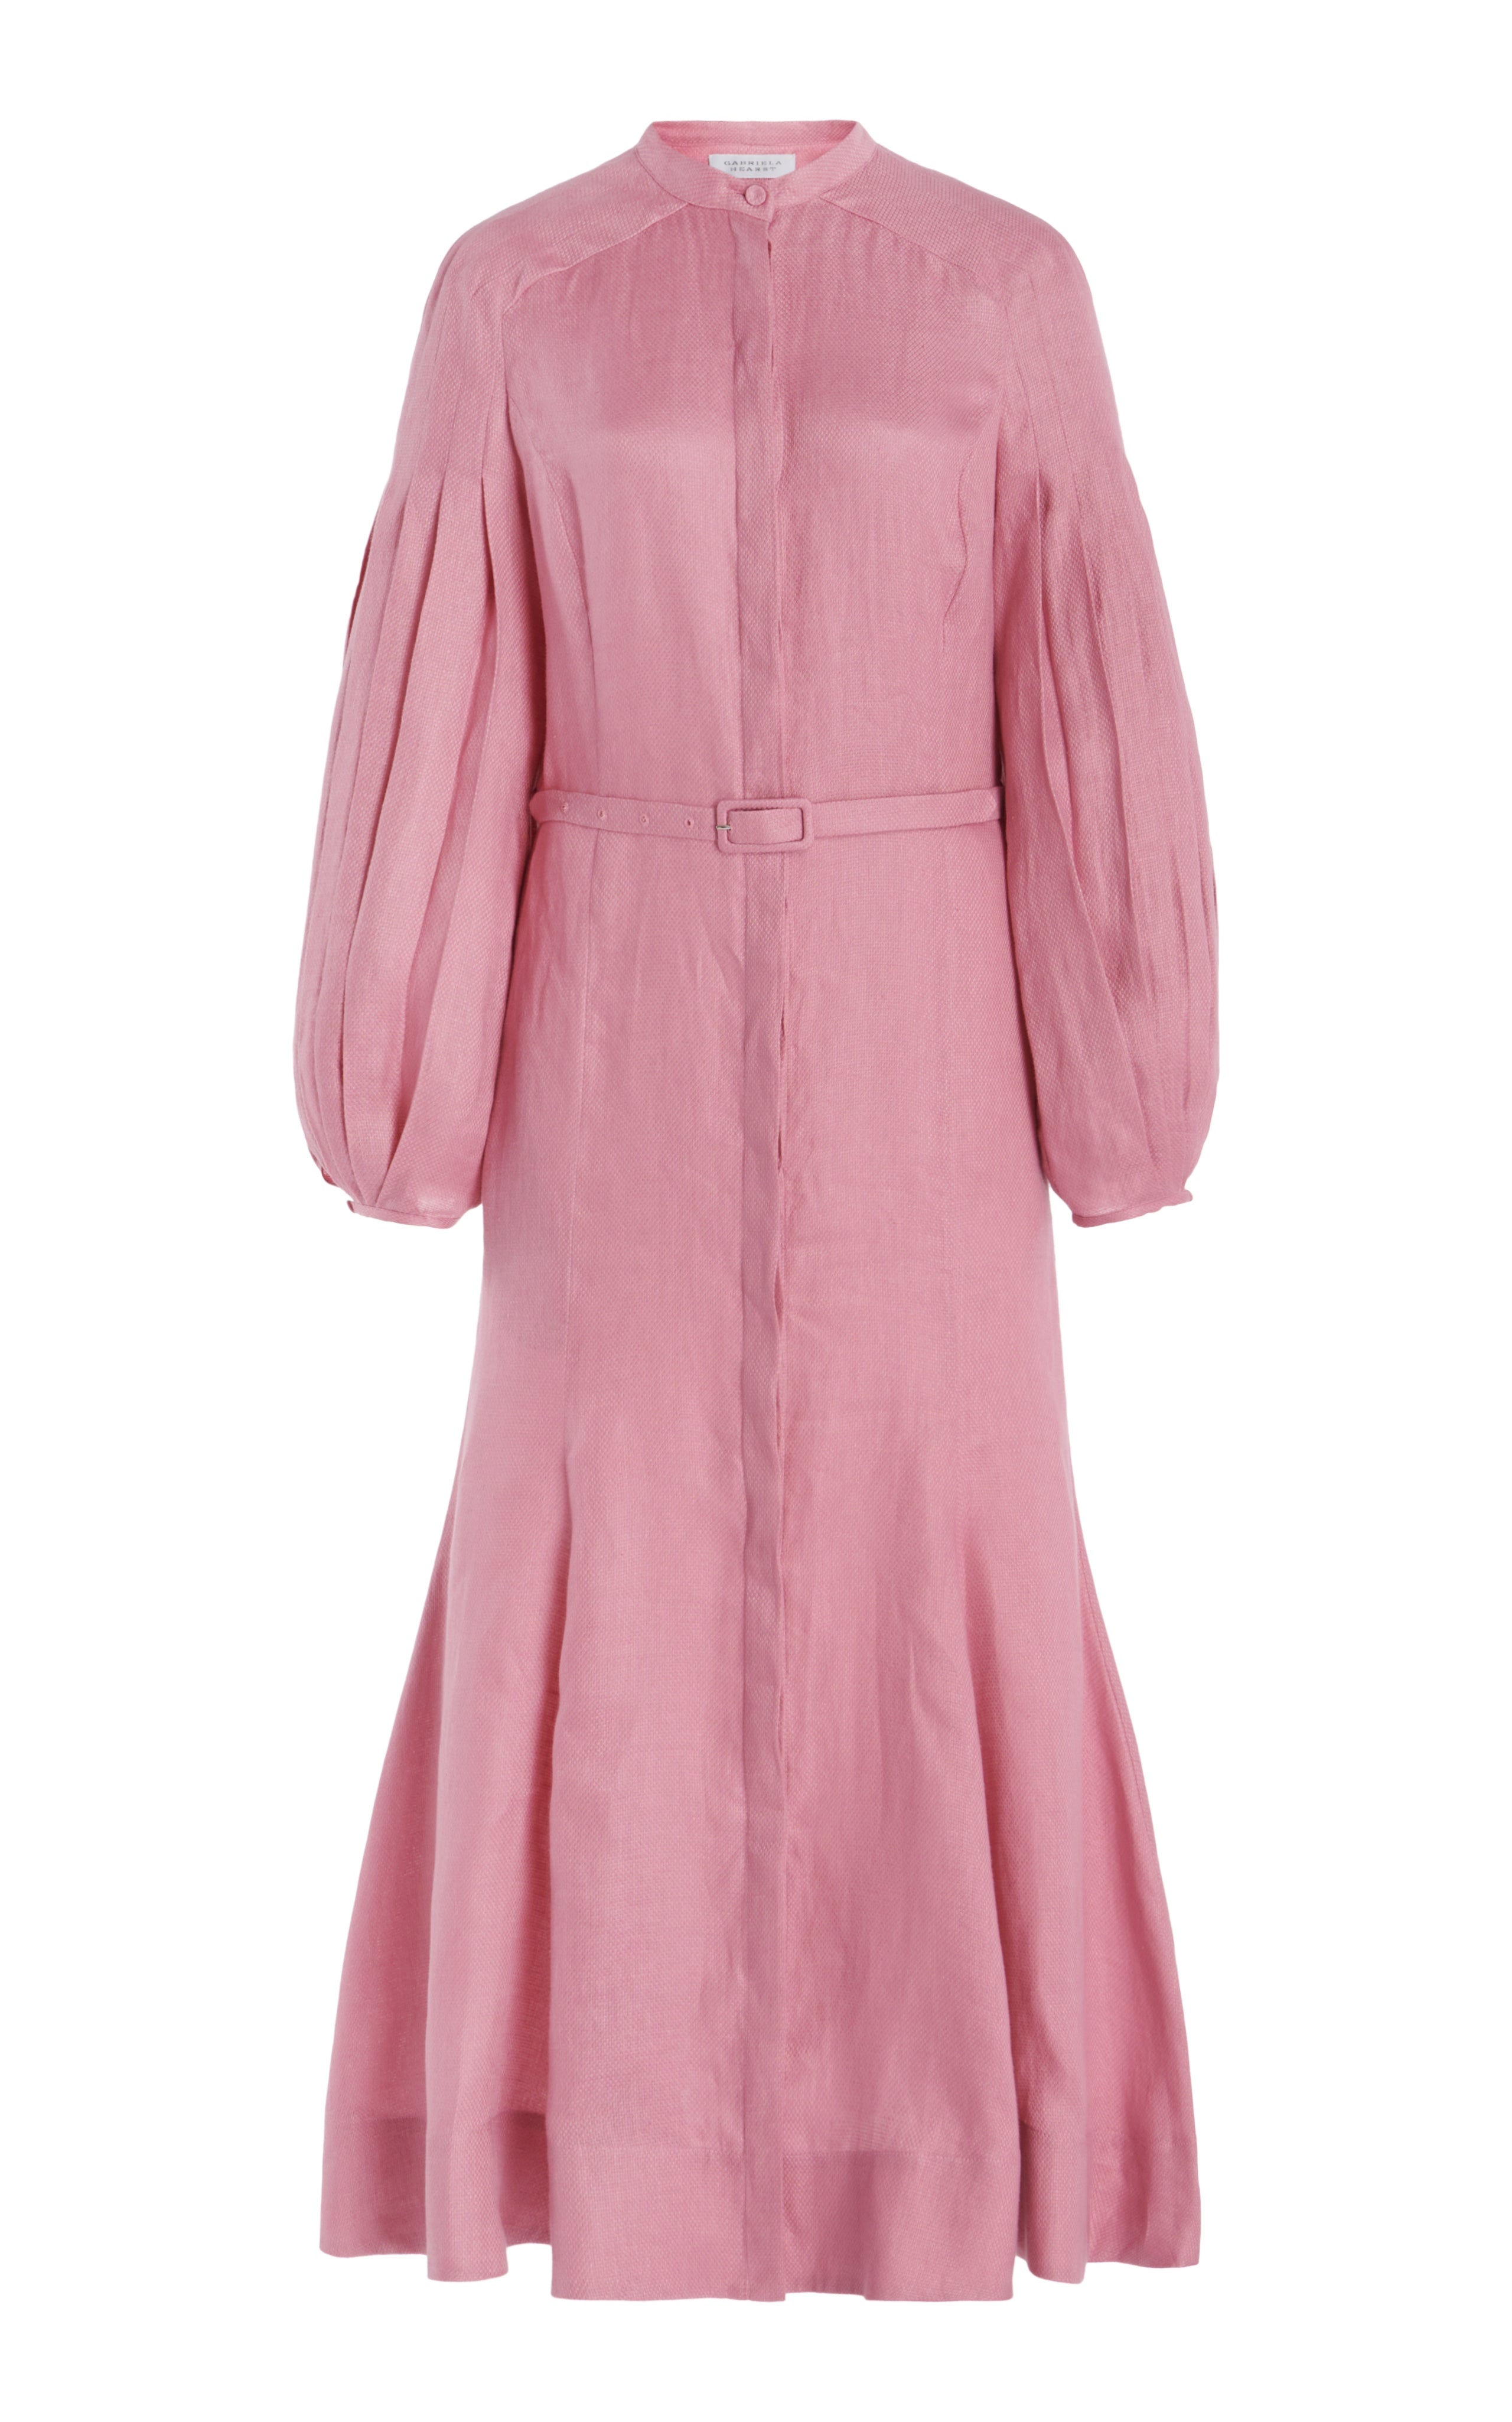 Lydia Dress with Slip in Rose Quartz Linen - 1